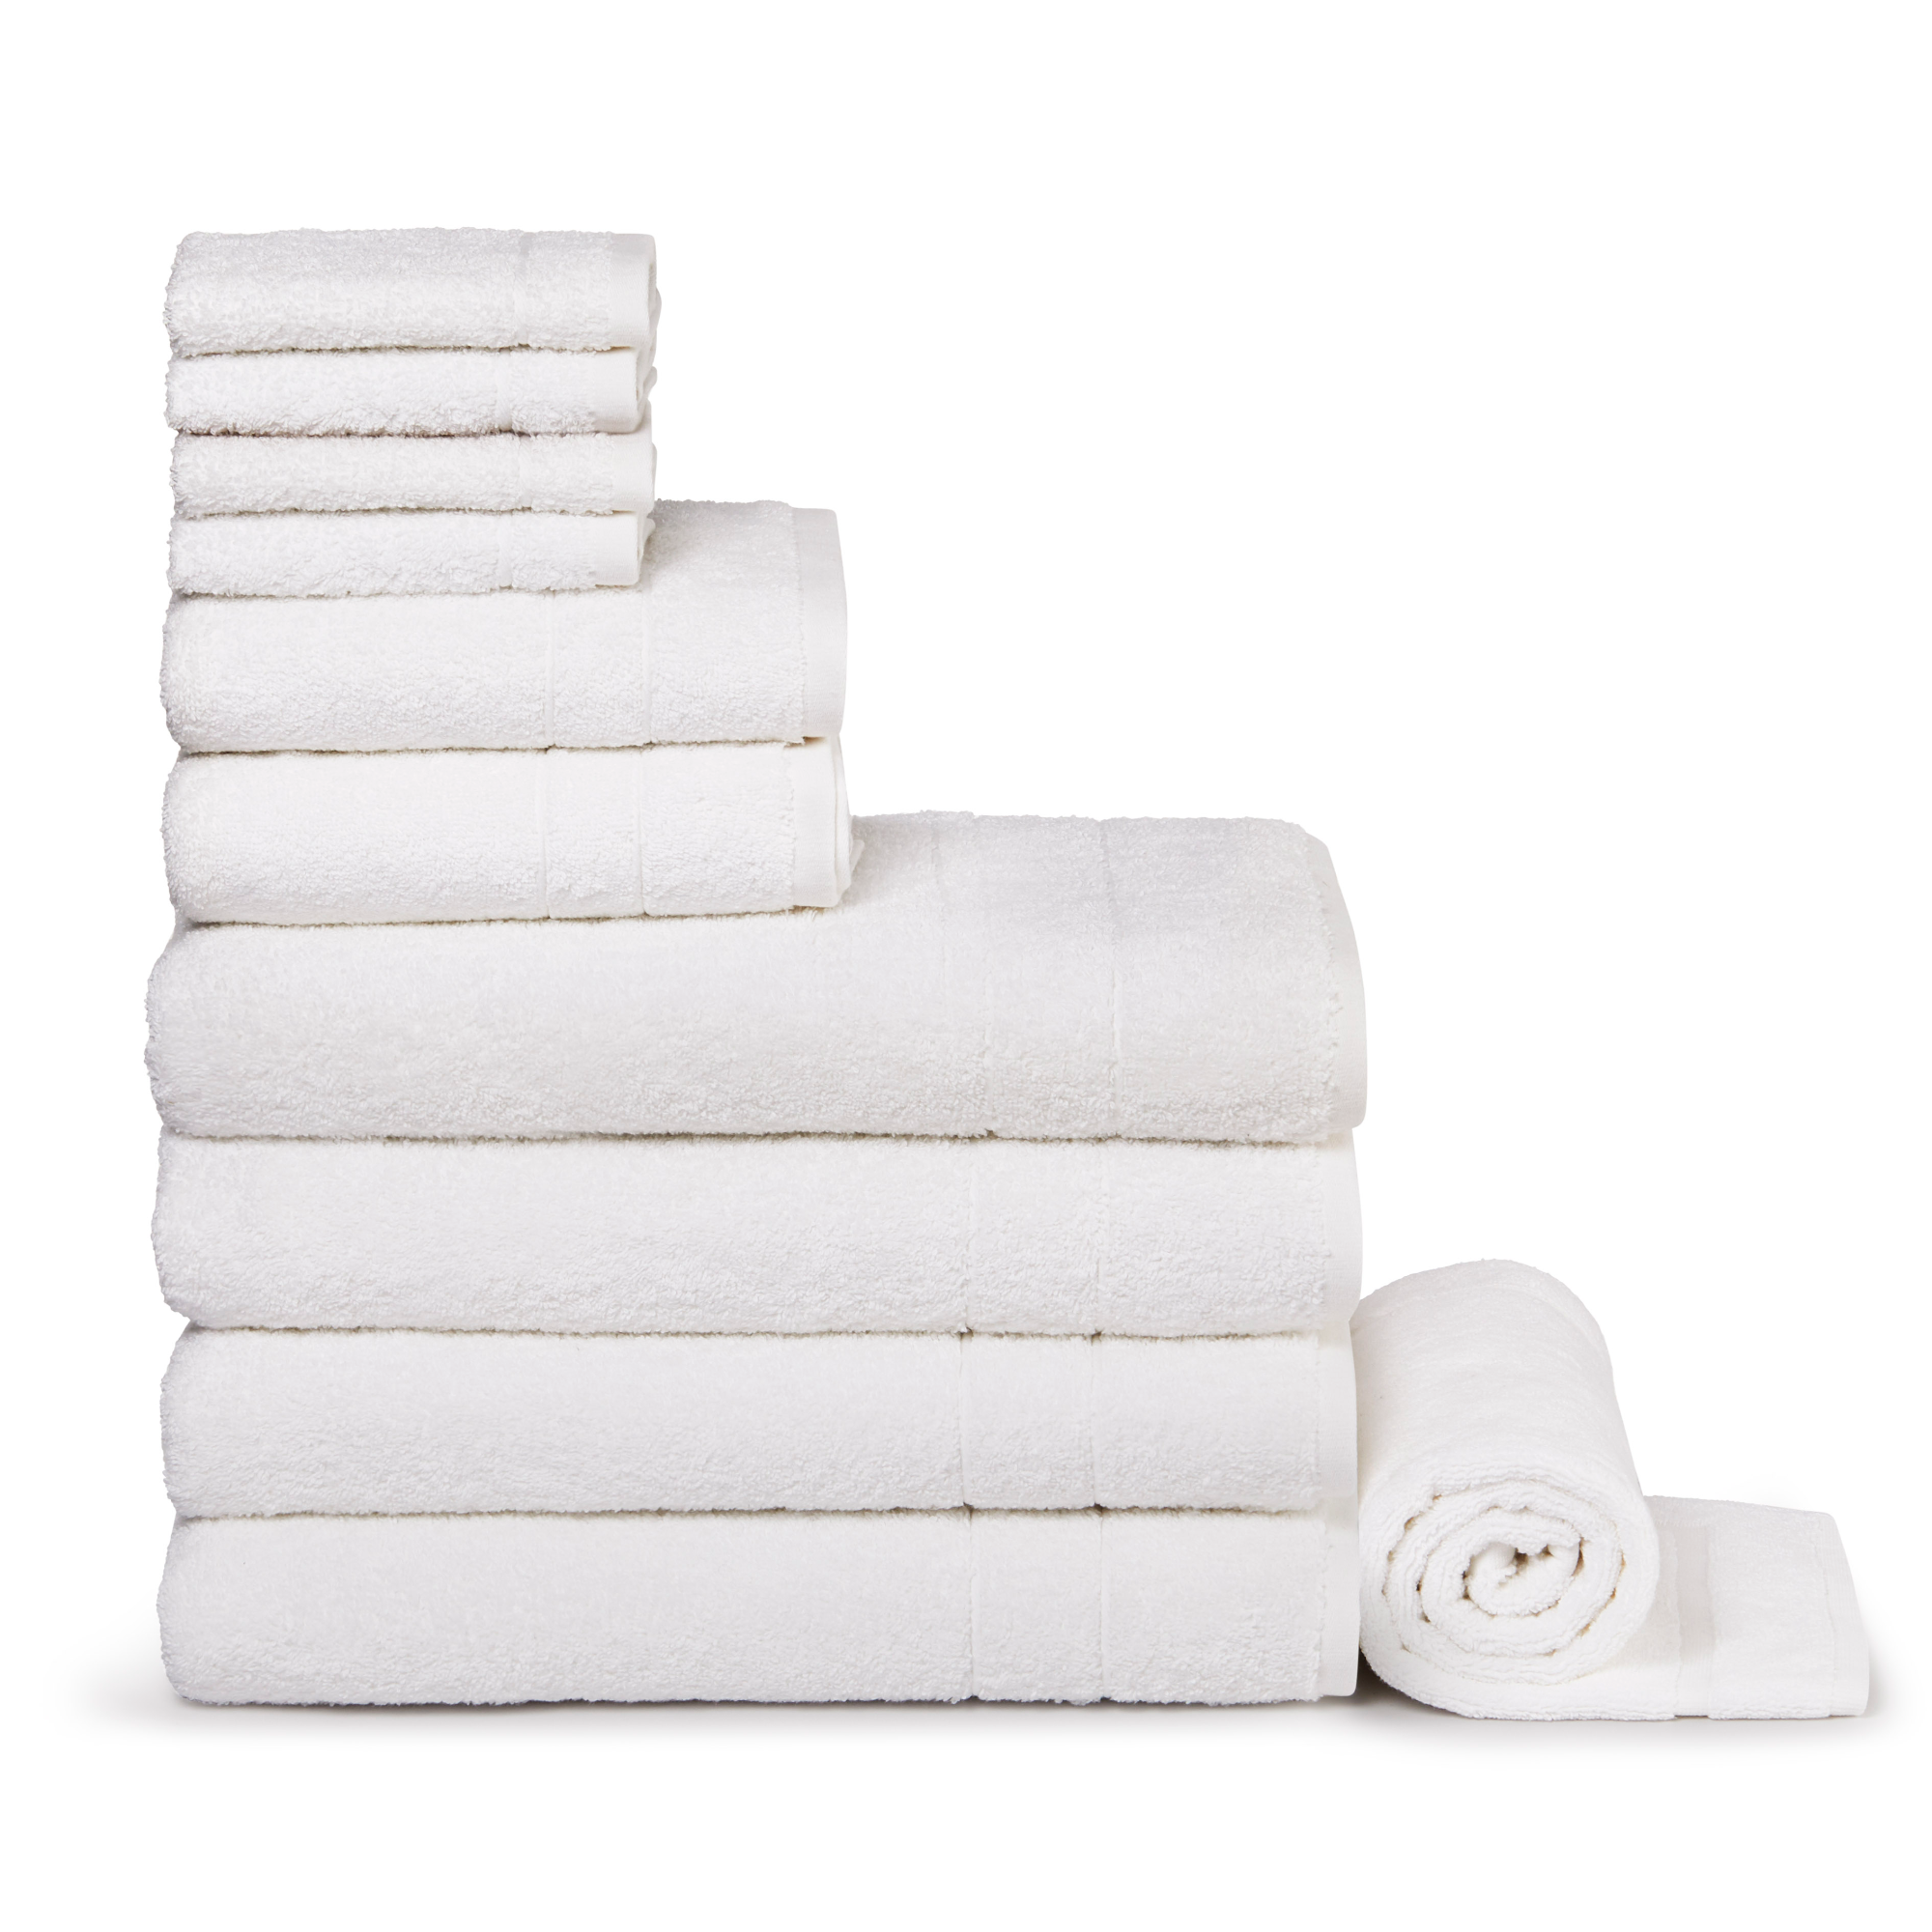 Super Plush Bath Sheet Move In Bundle White